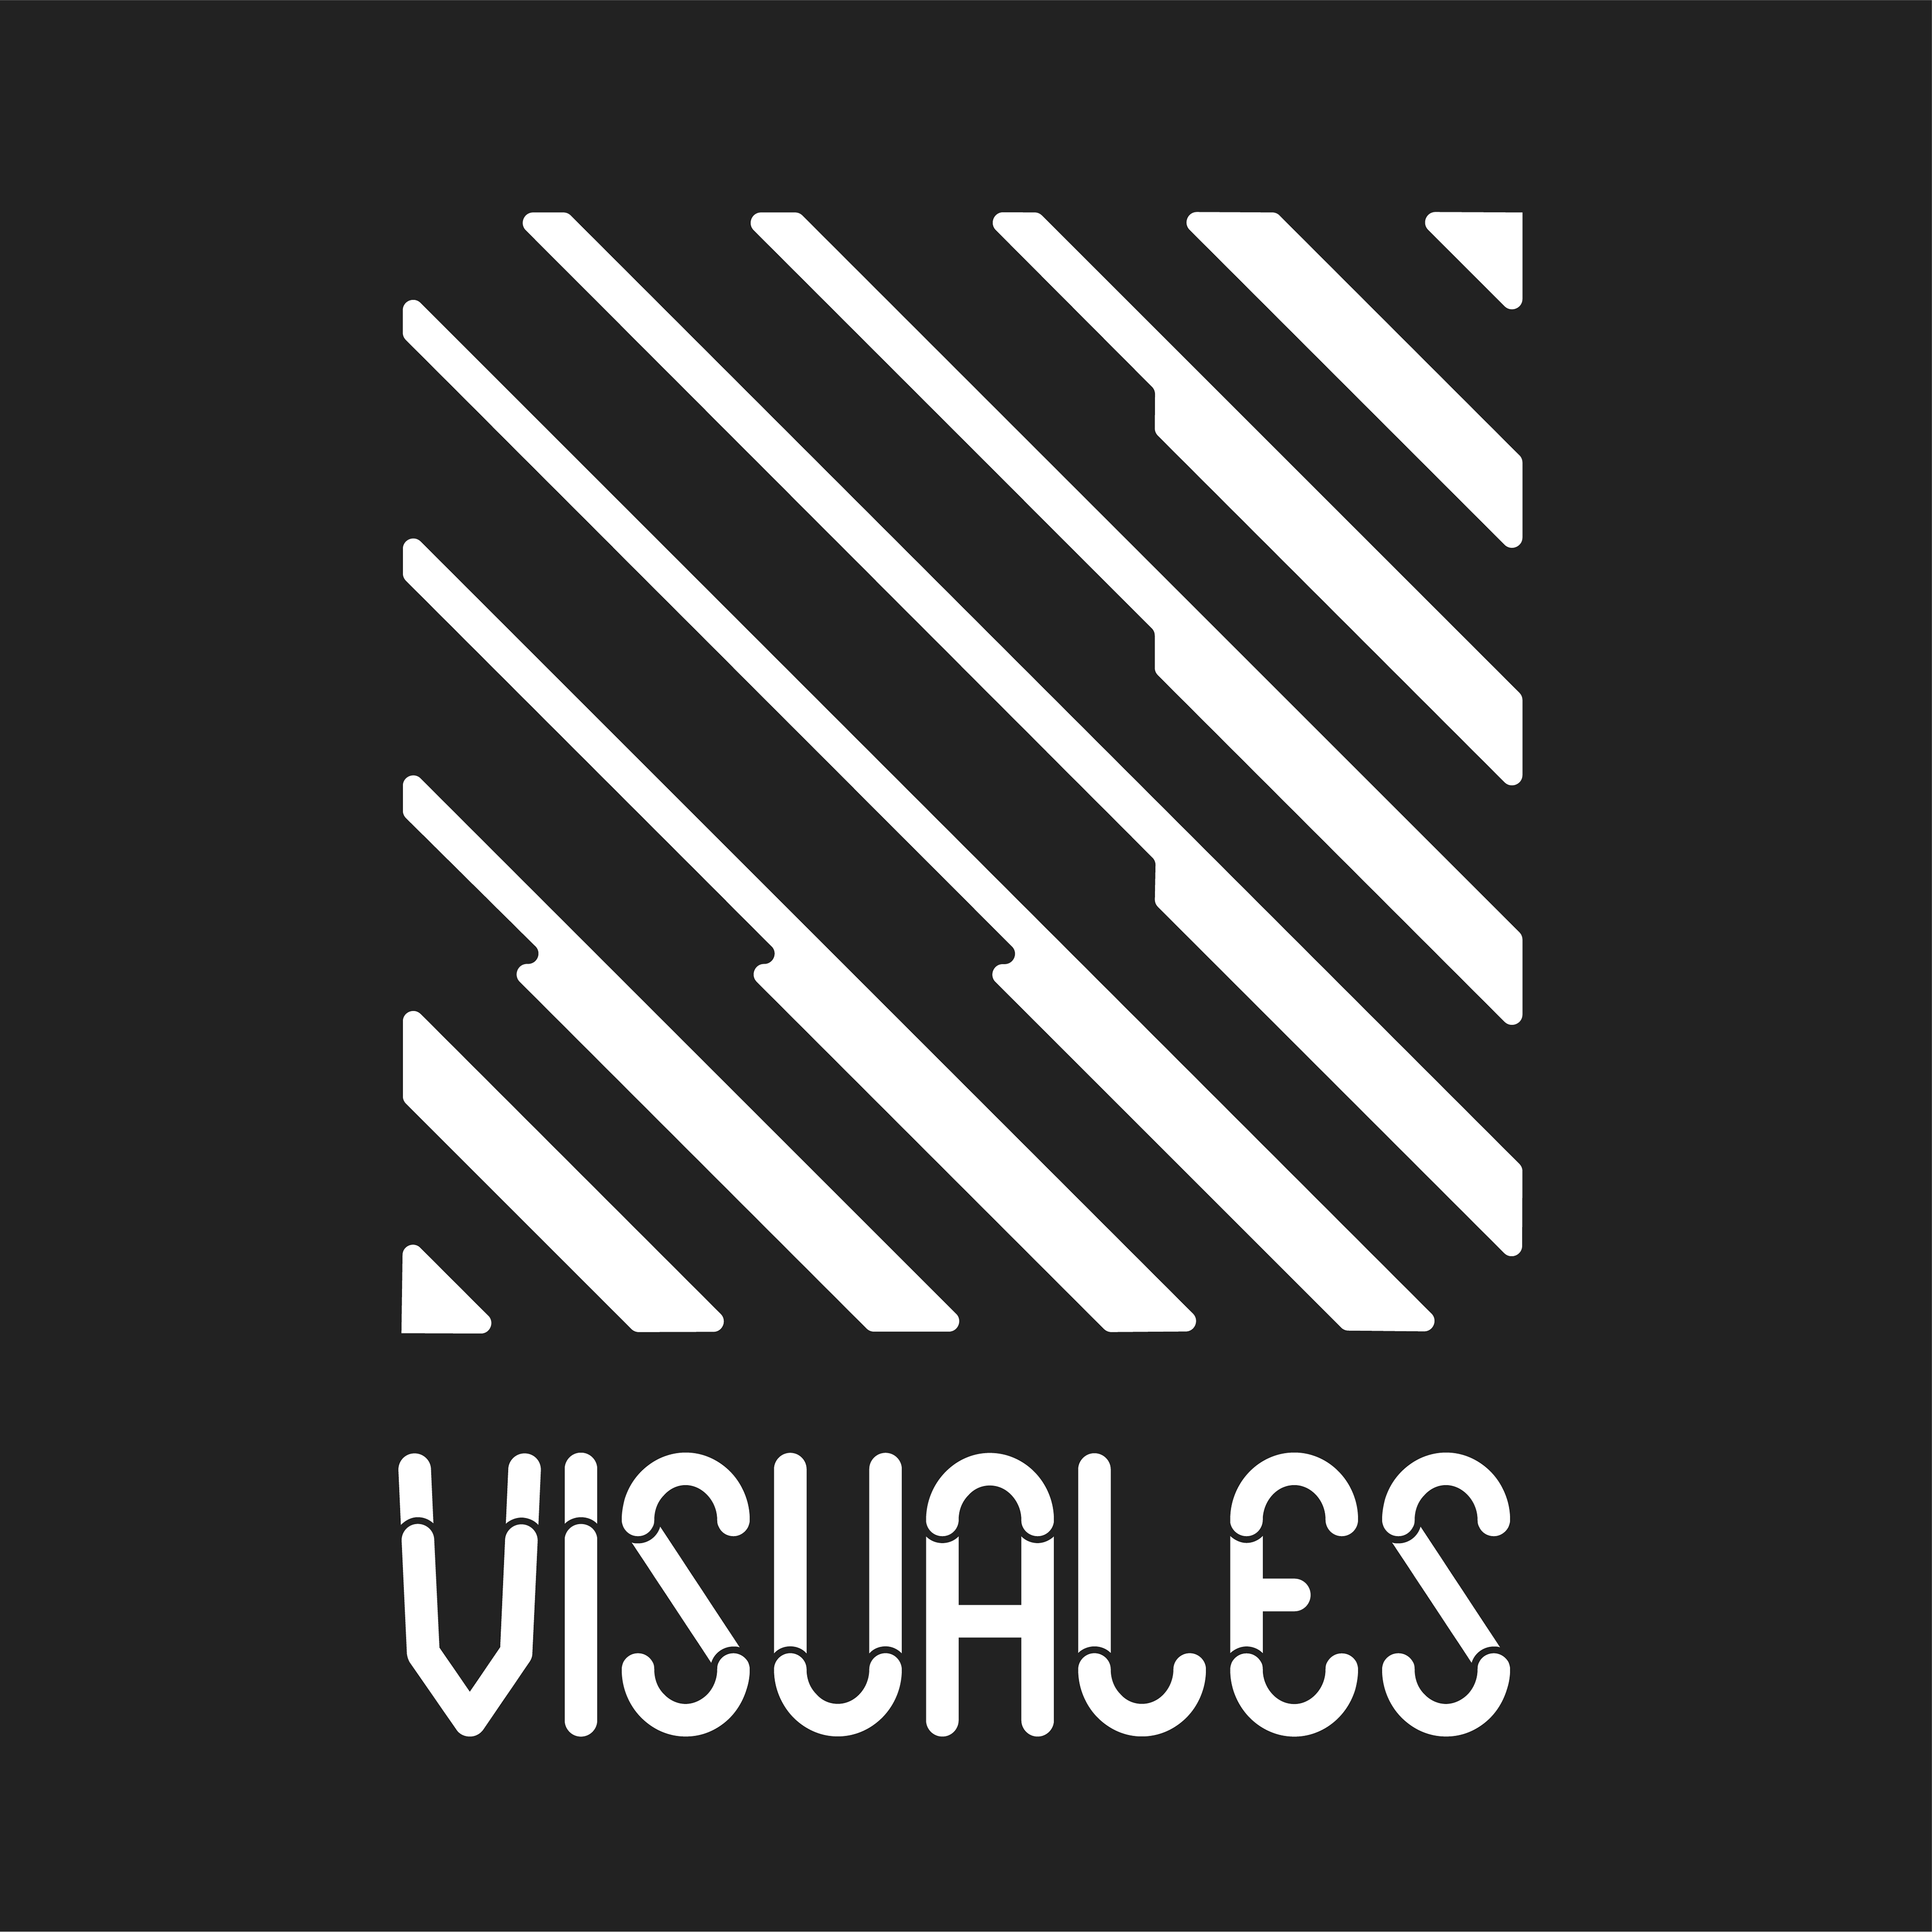 Studio Visuales